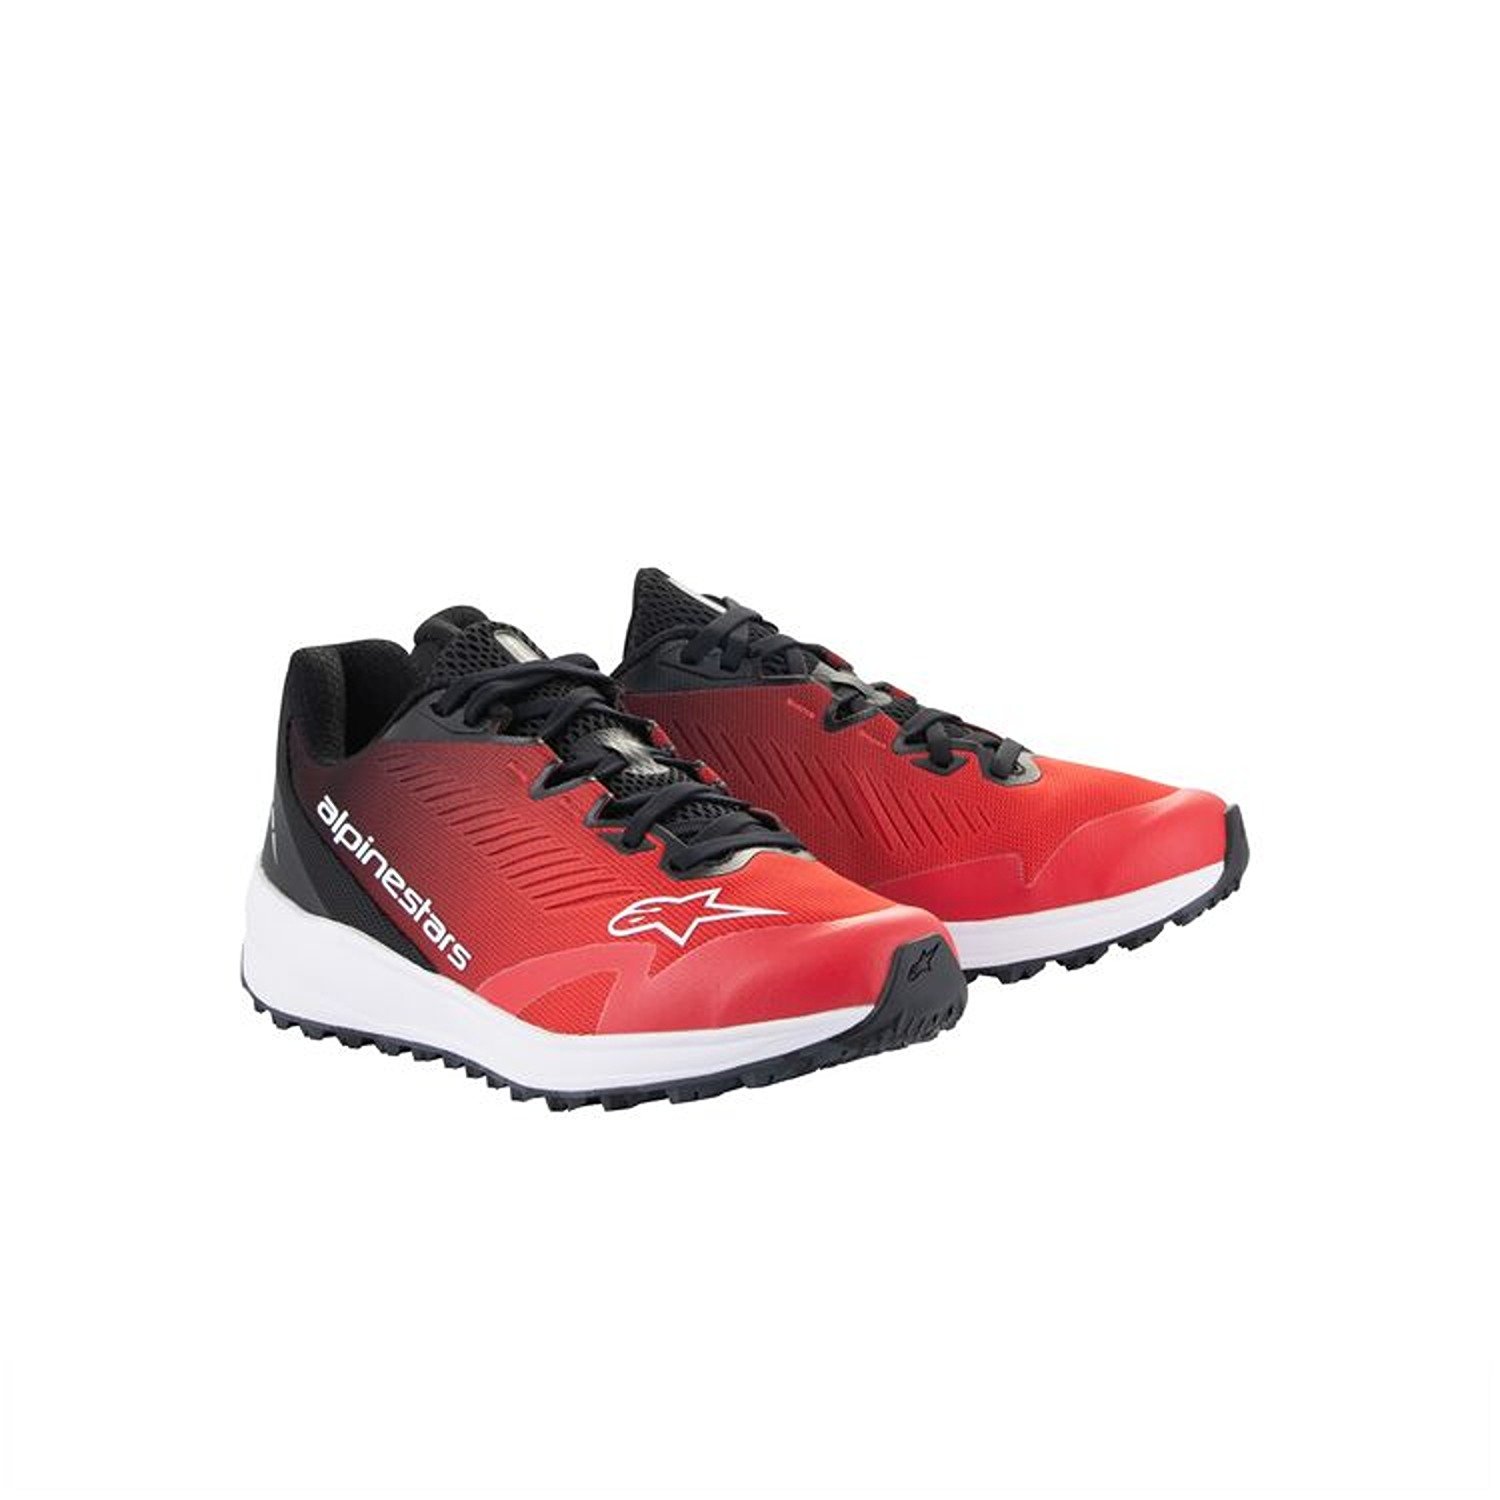 Image of Alpinestars Meta Road V2 Shoes Red Black White Size US 85 ID 8059347353555